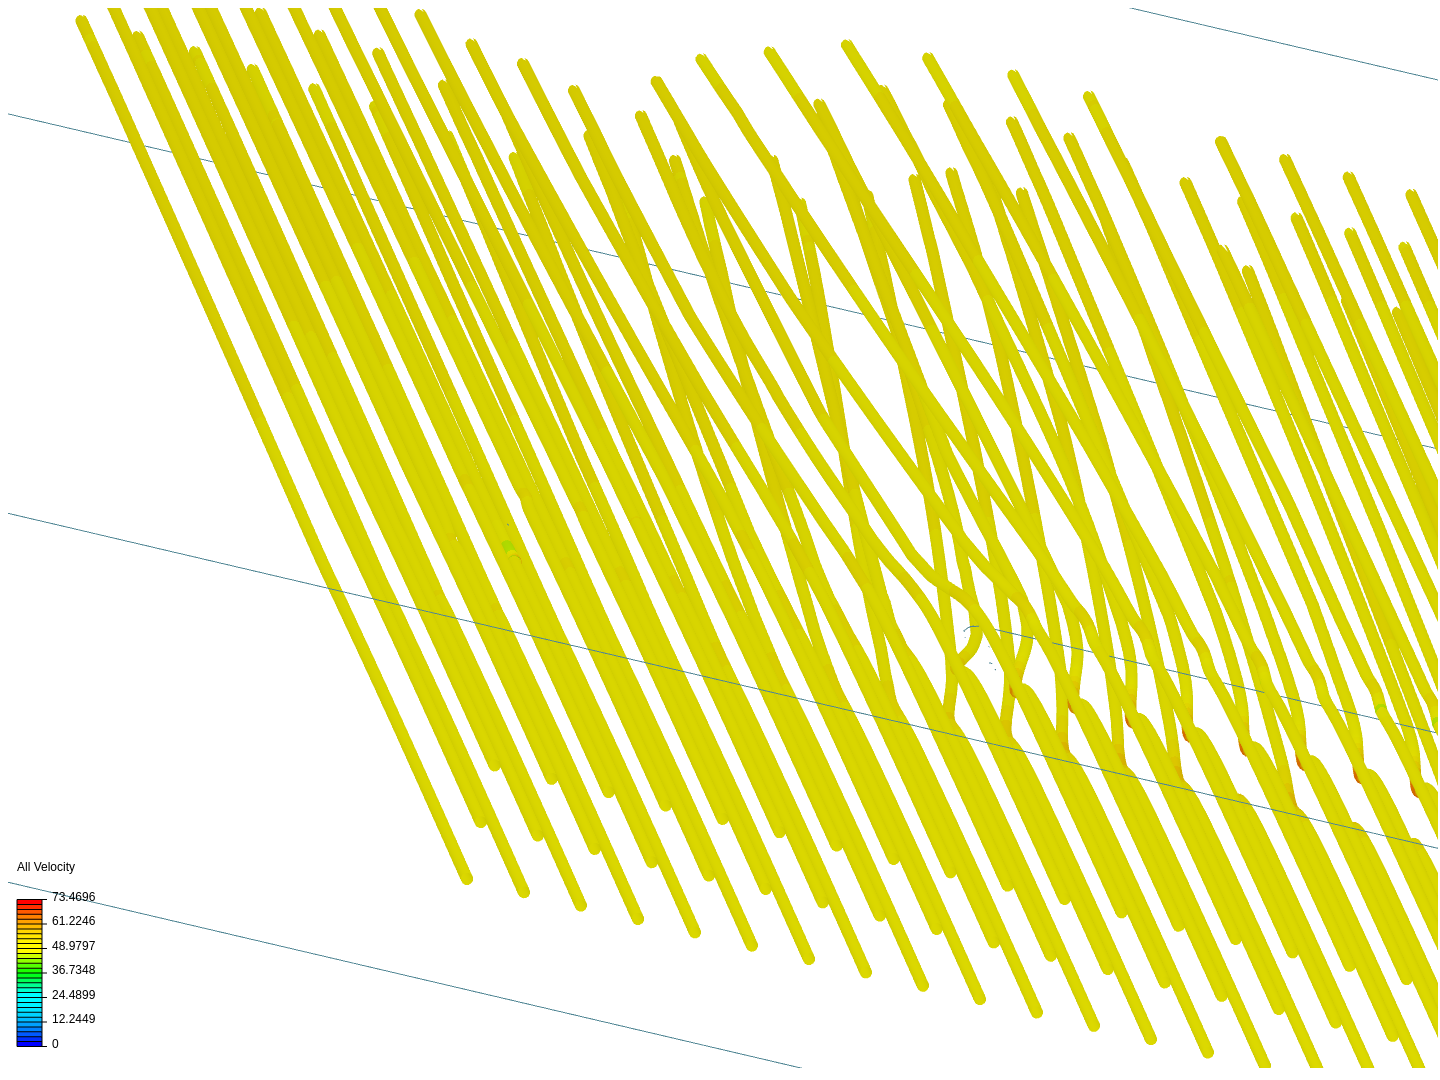 ULTRA Spanwise w/Sensor Turbulence Investigation image